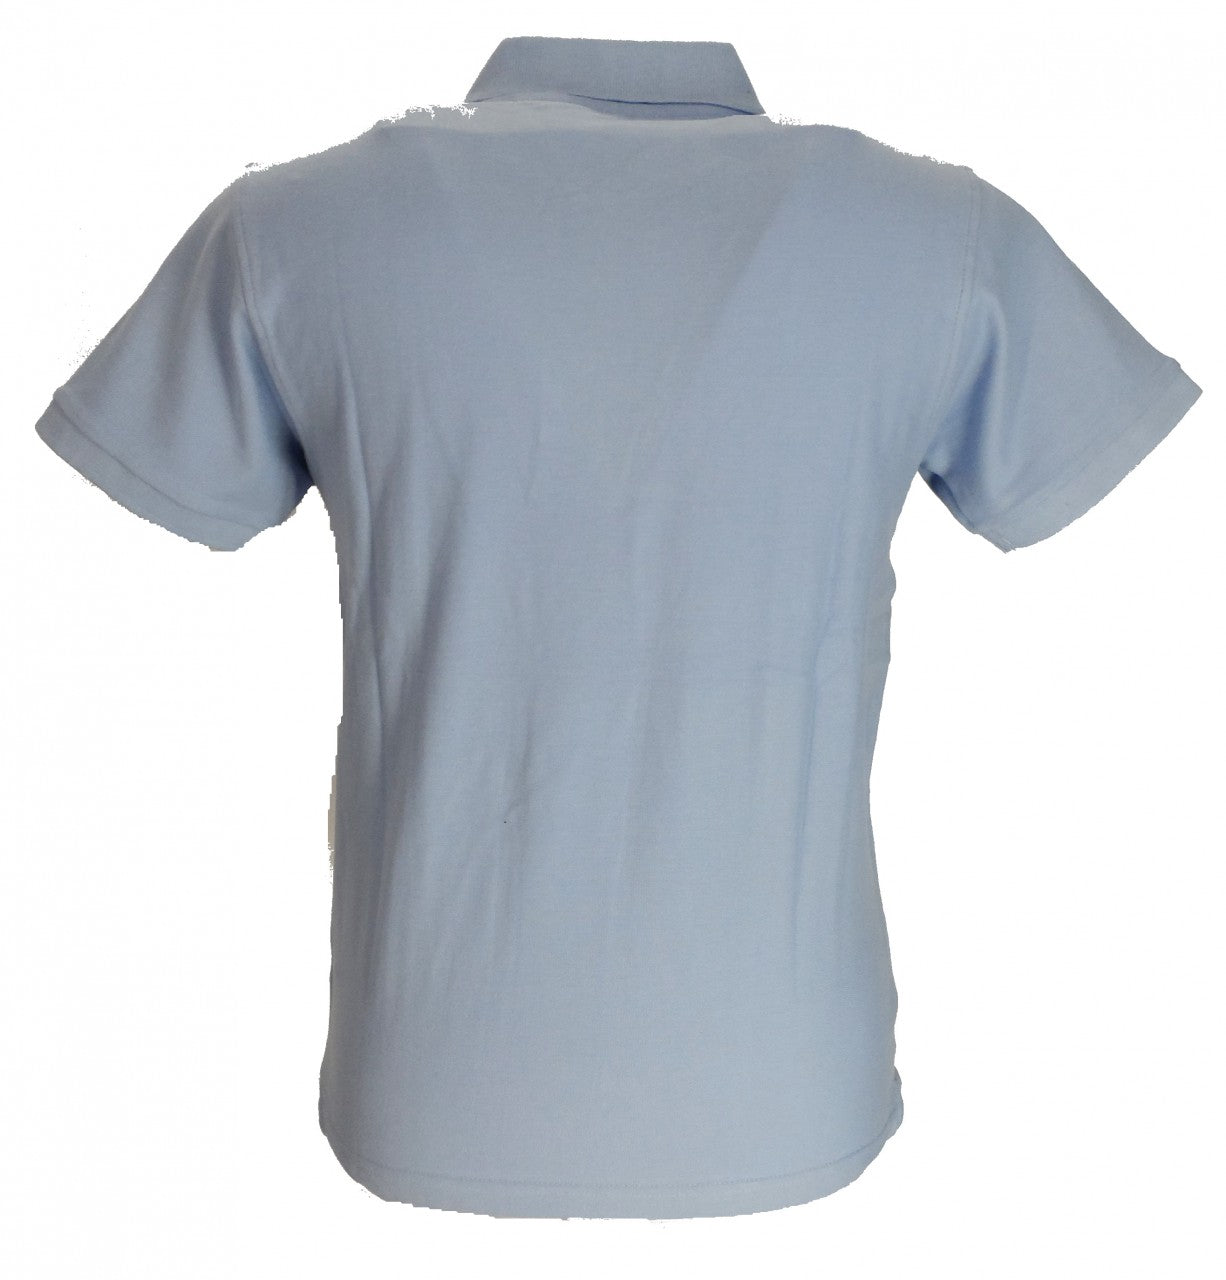 Relco gestreifte Mod Polo Shirts im Vintage-Stil, Himmelblau/Marineblau